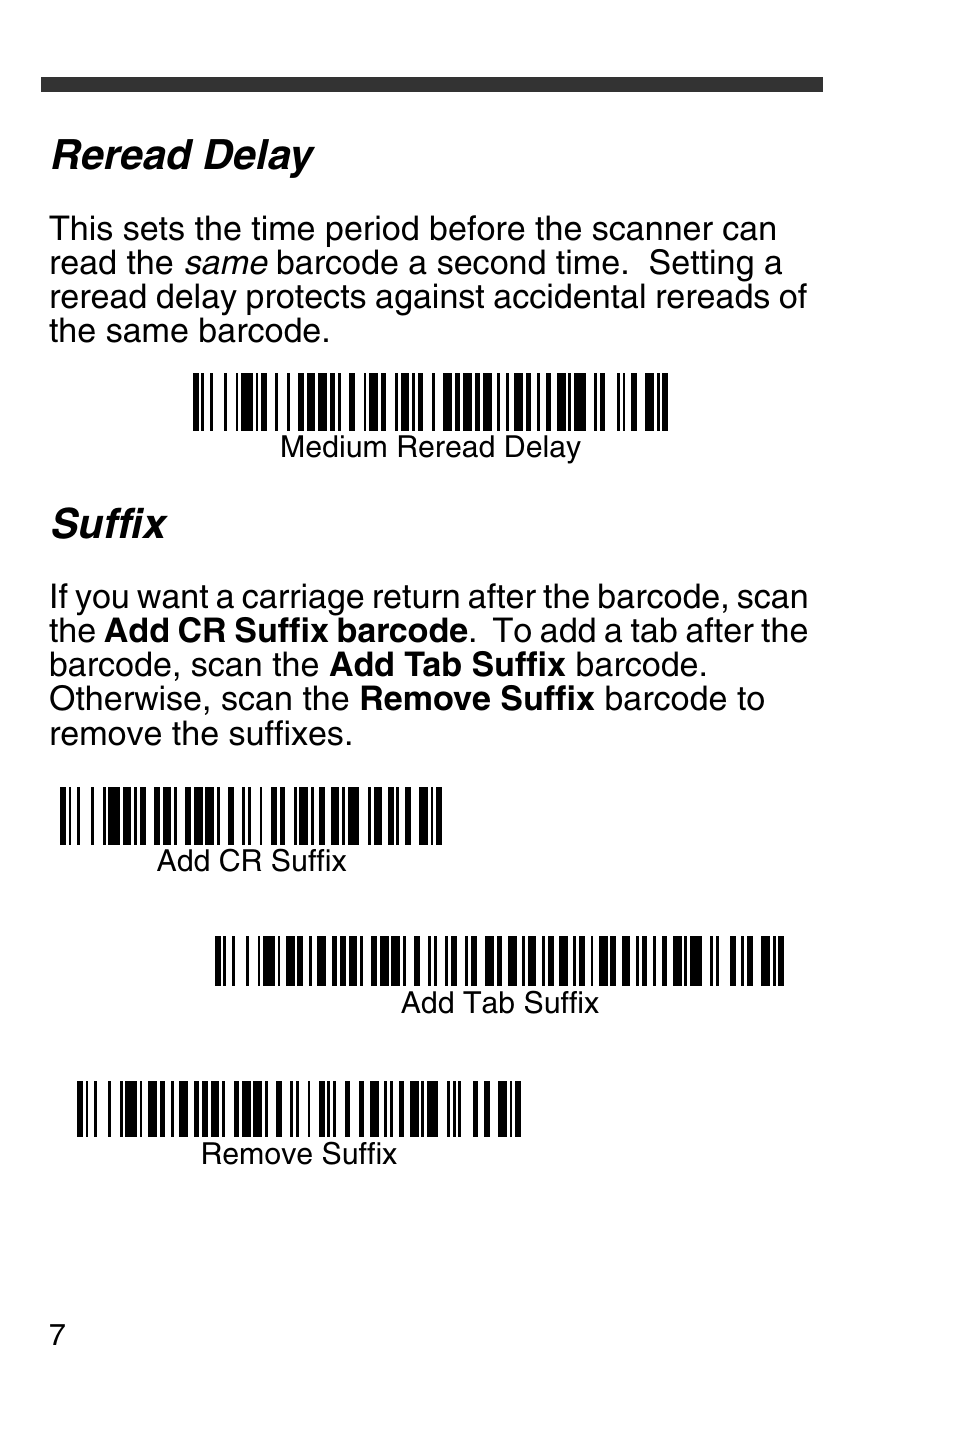 Honeywell barcode scanner carriage return